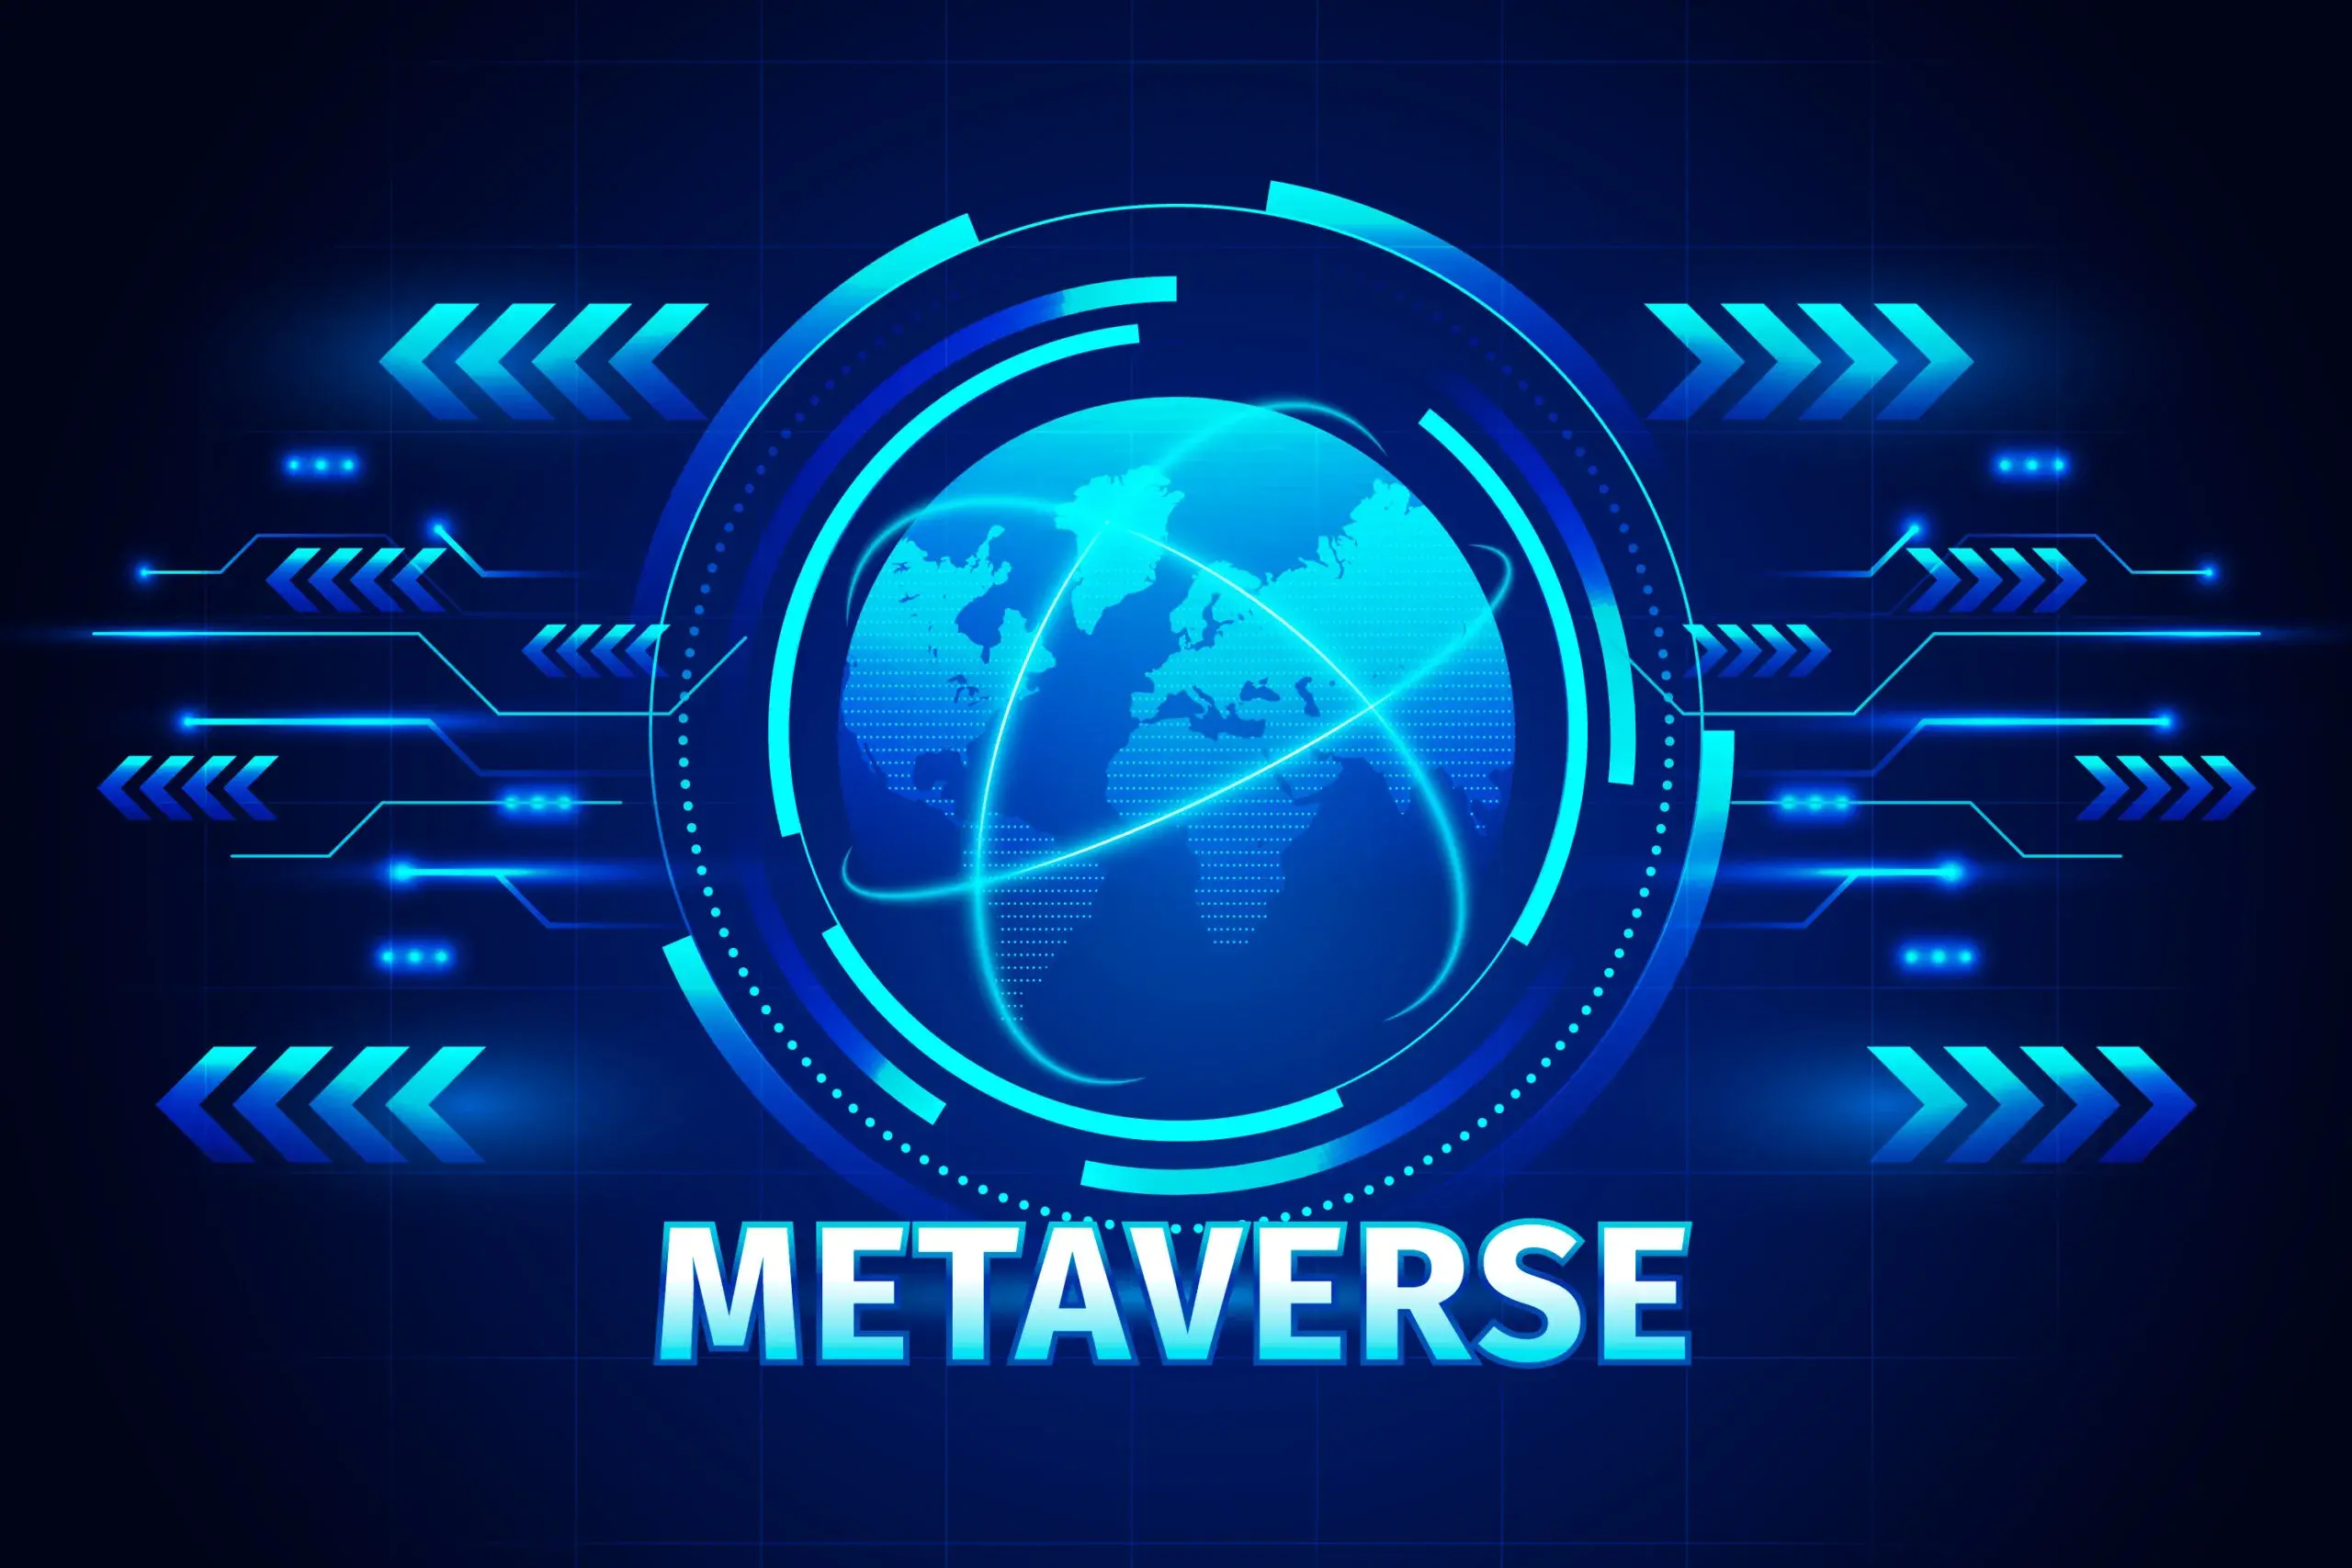 The Metaverse world